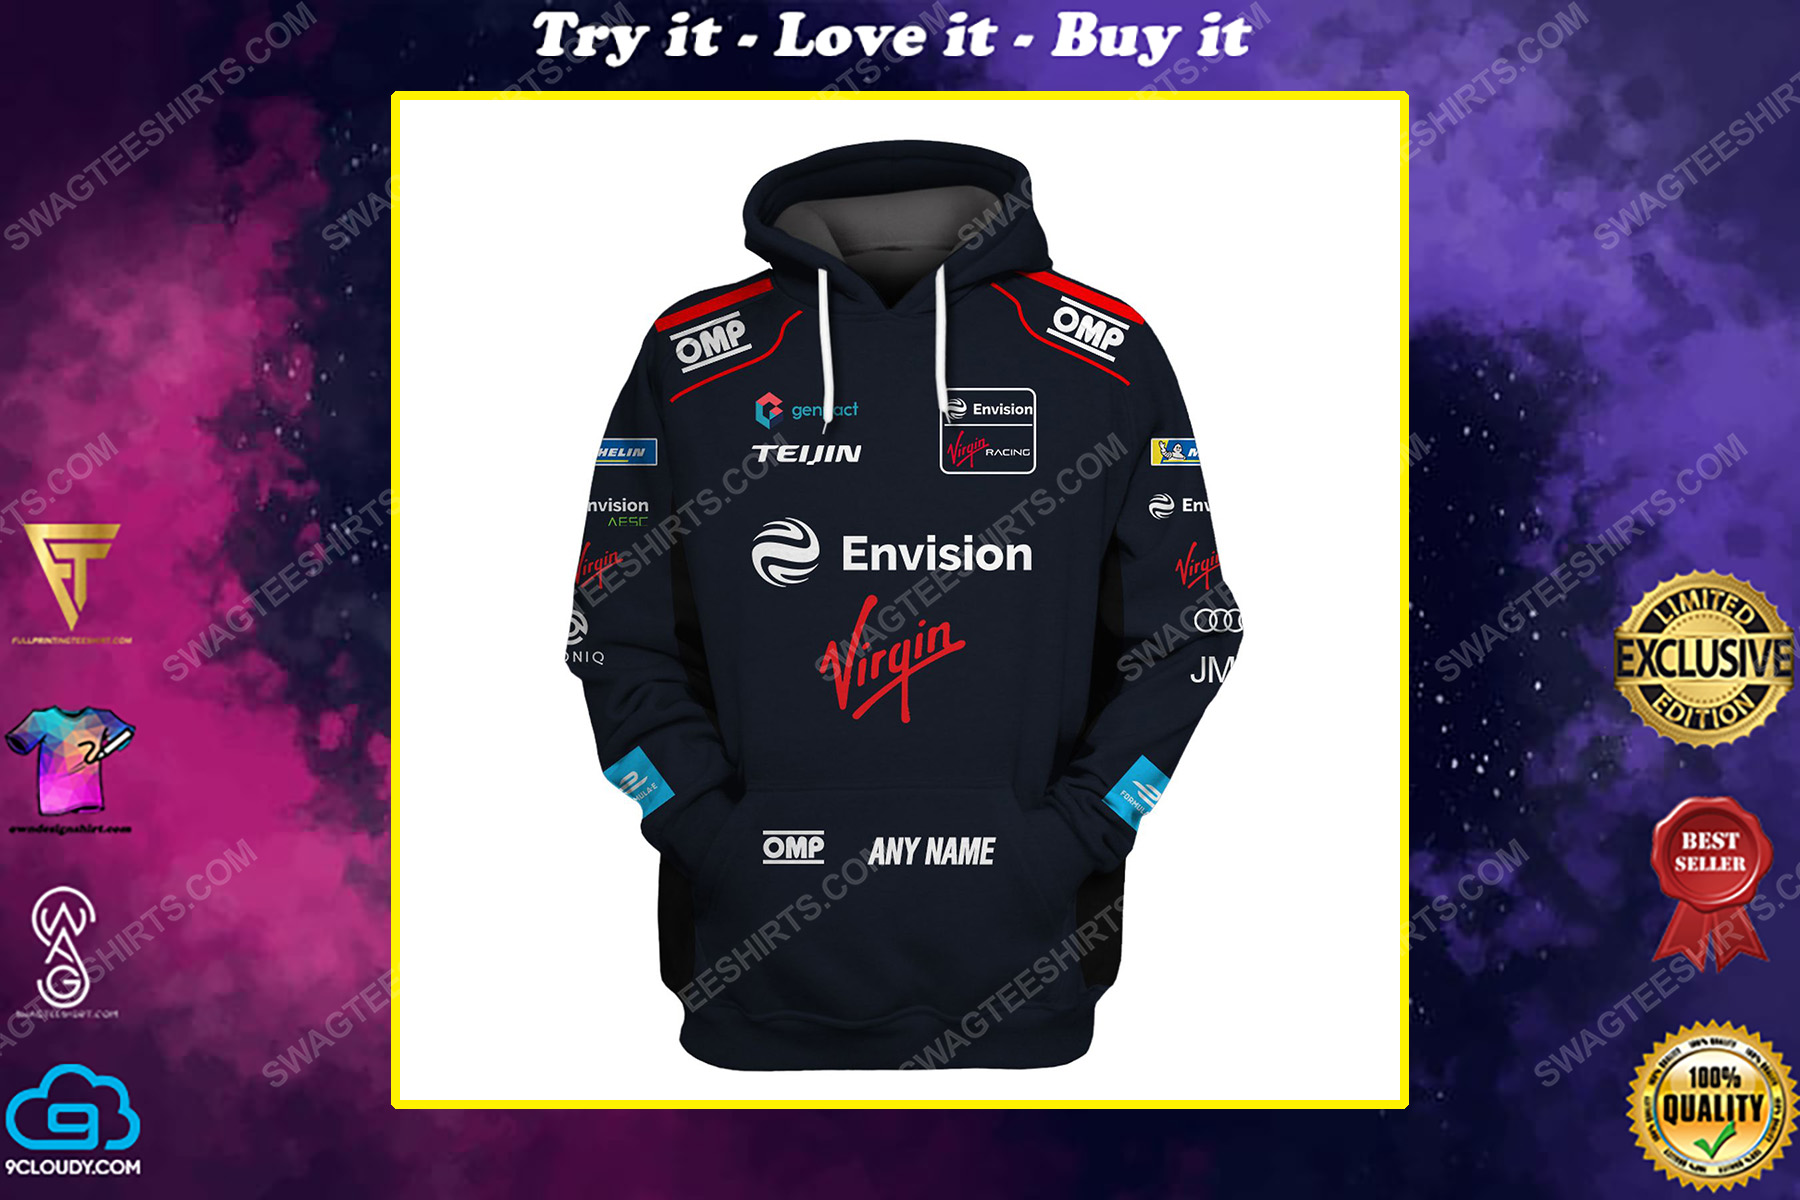 Custom envision virgin racing team motorsport full printing shirt